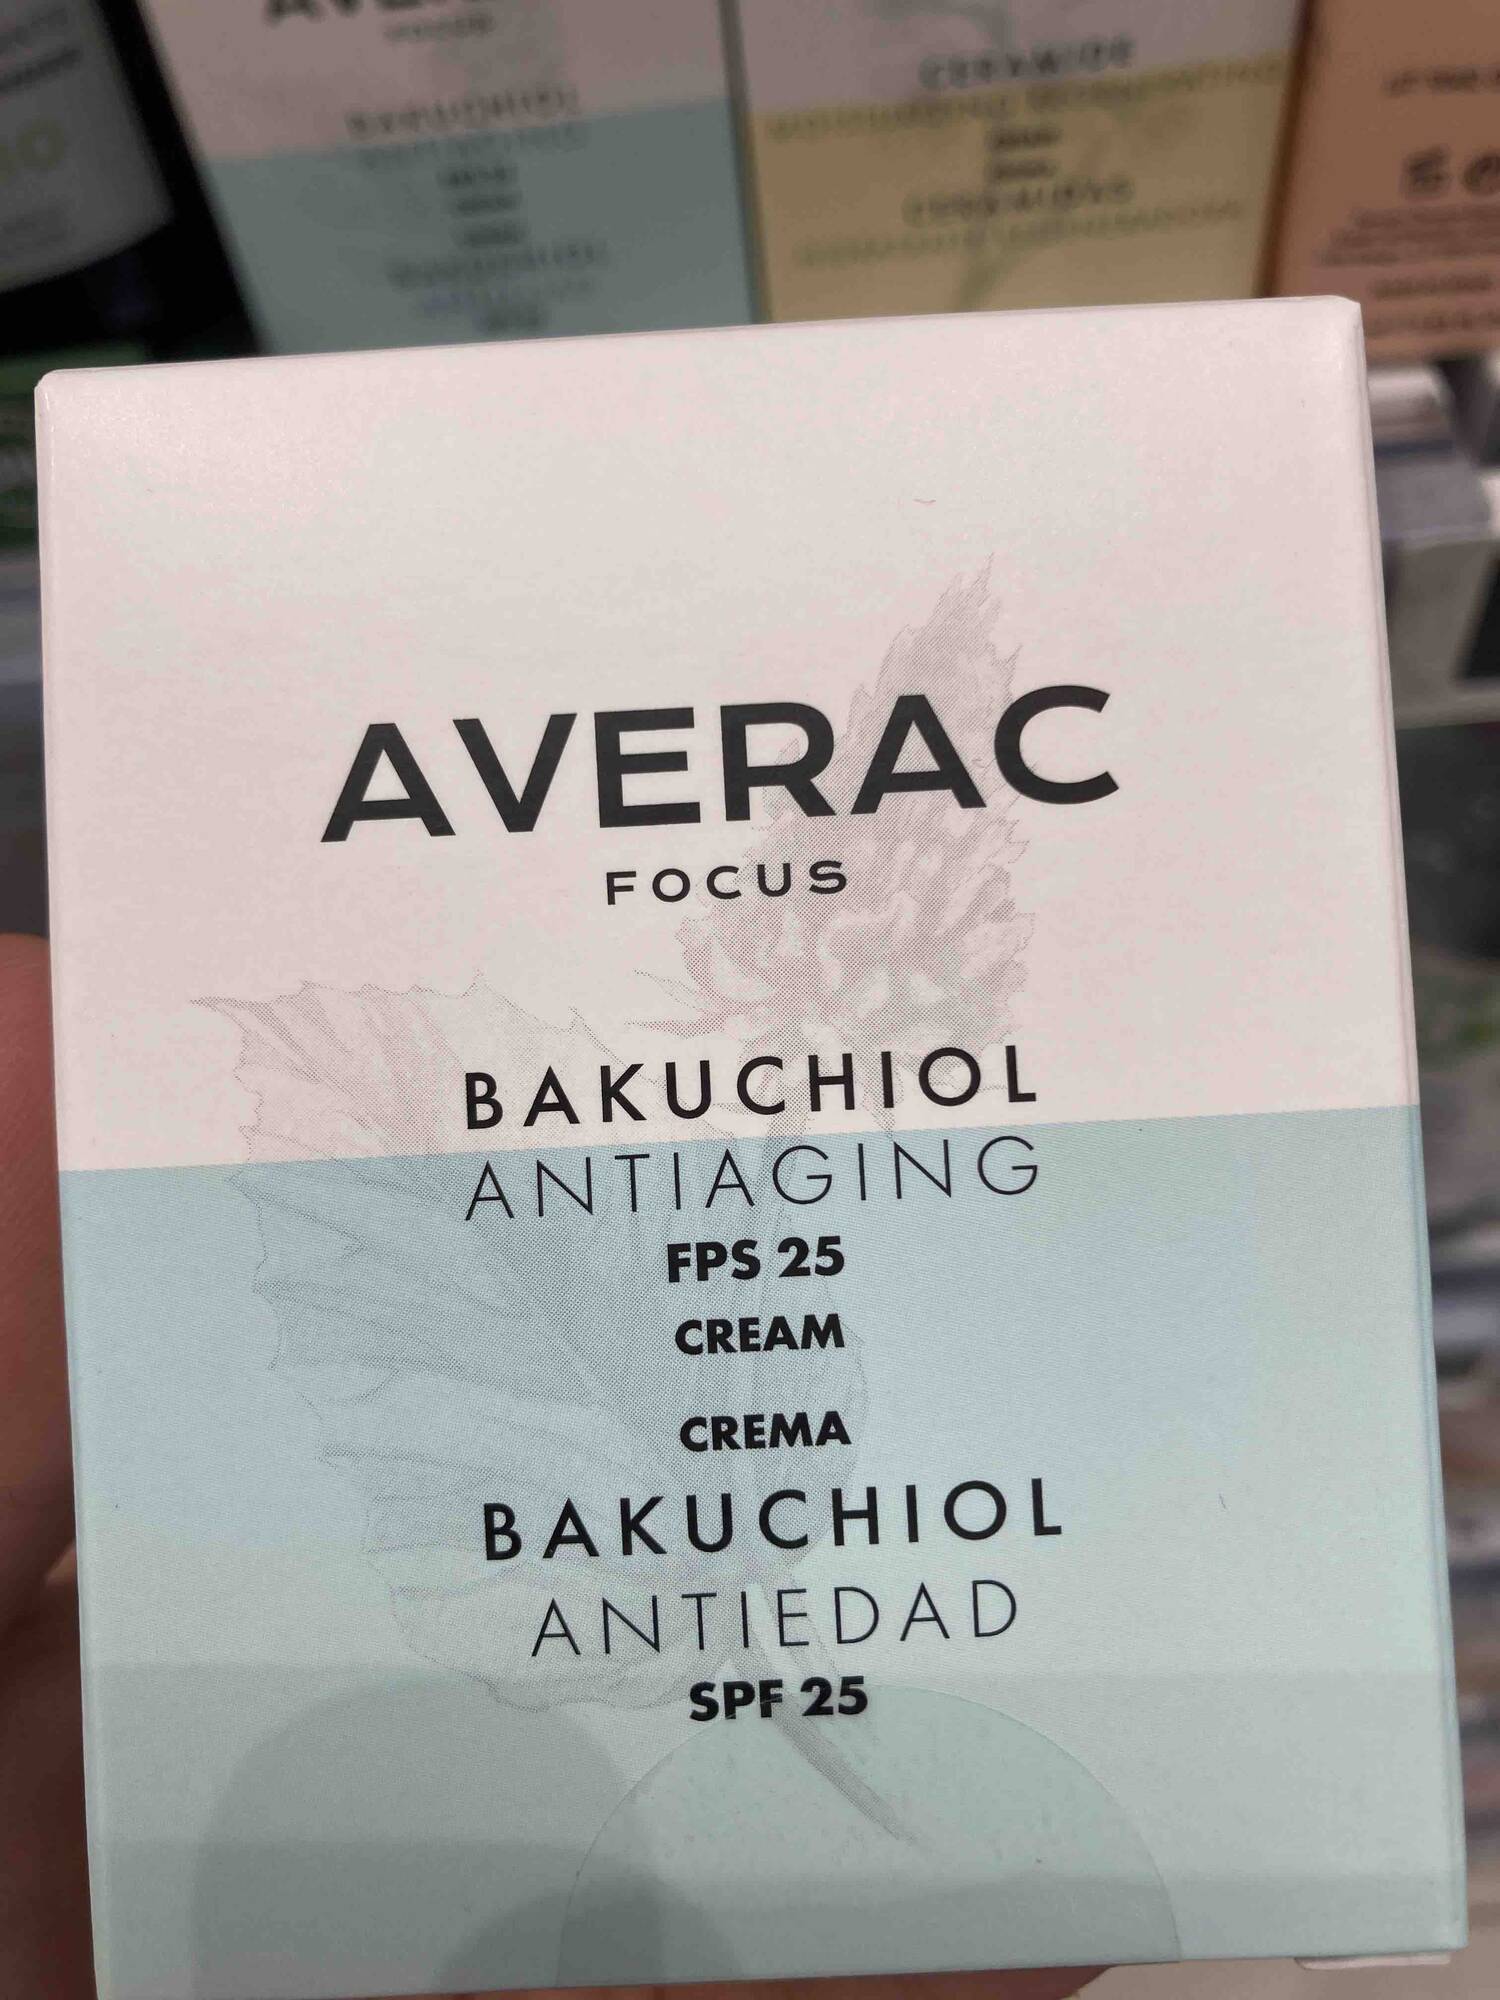 AVERAC - Bakuchiol antiaging